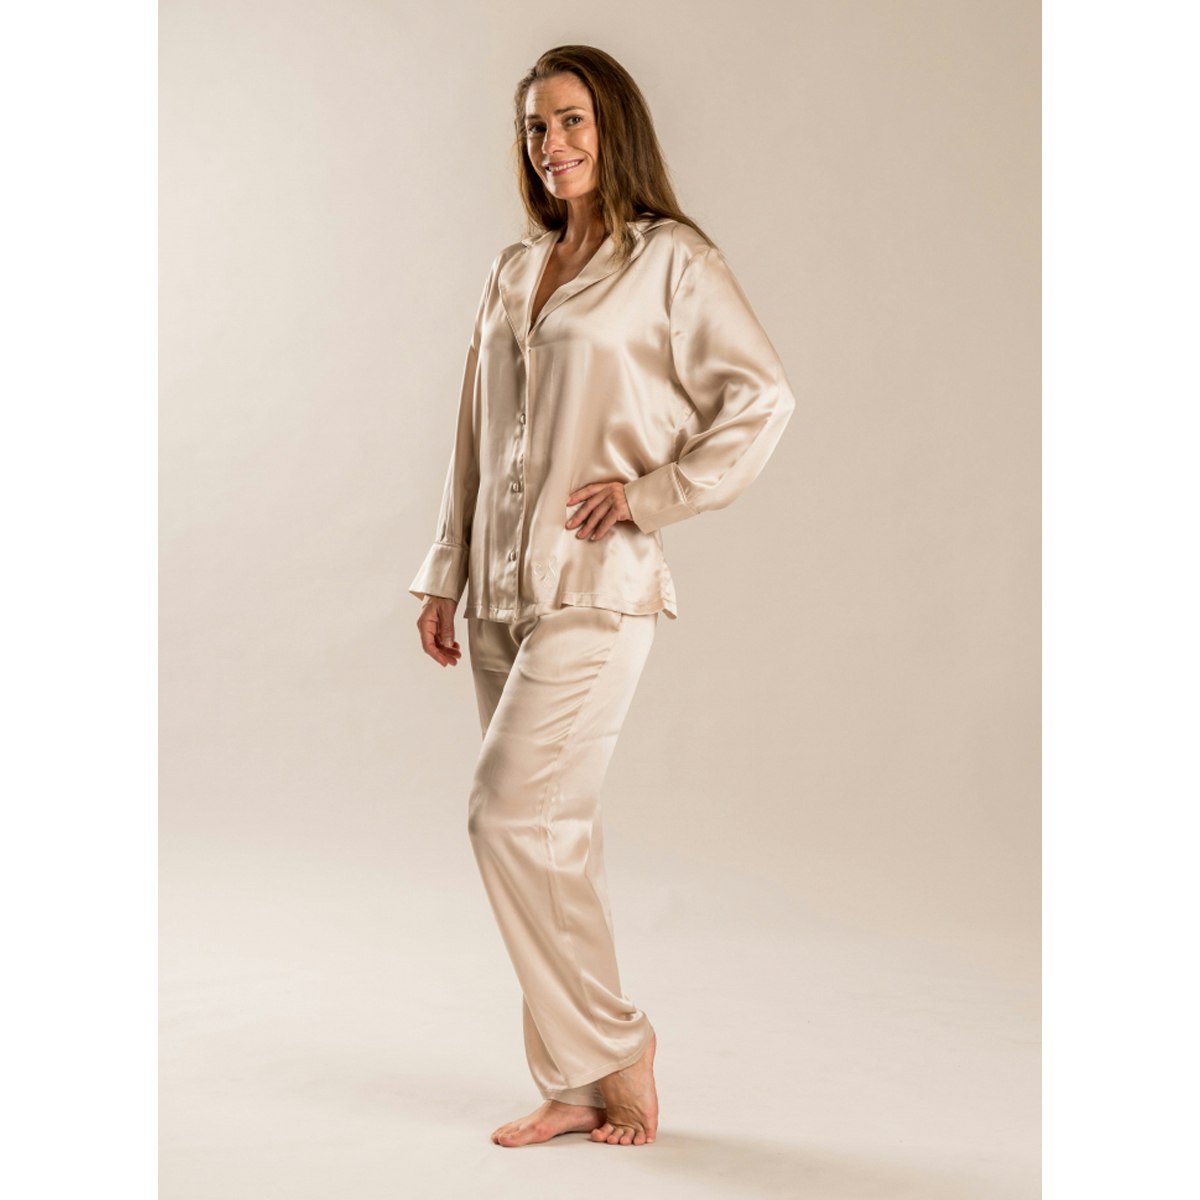 Pyjamas Silke Victoria Champagne - Lillytex - Hemtextil online